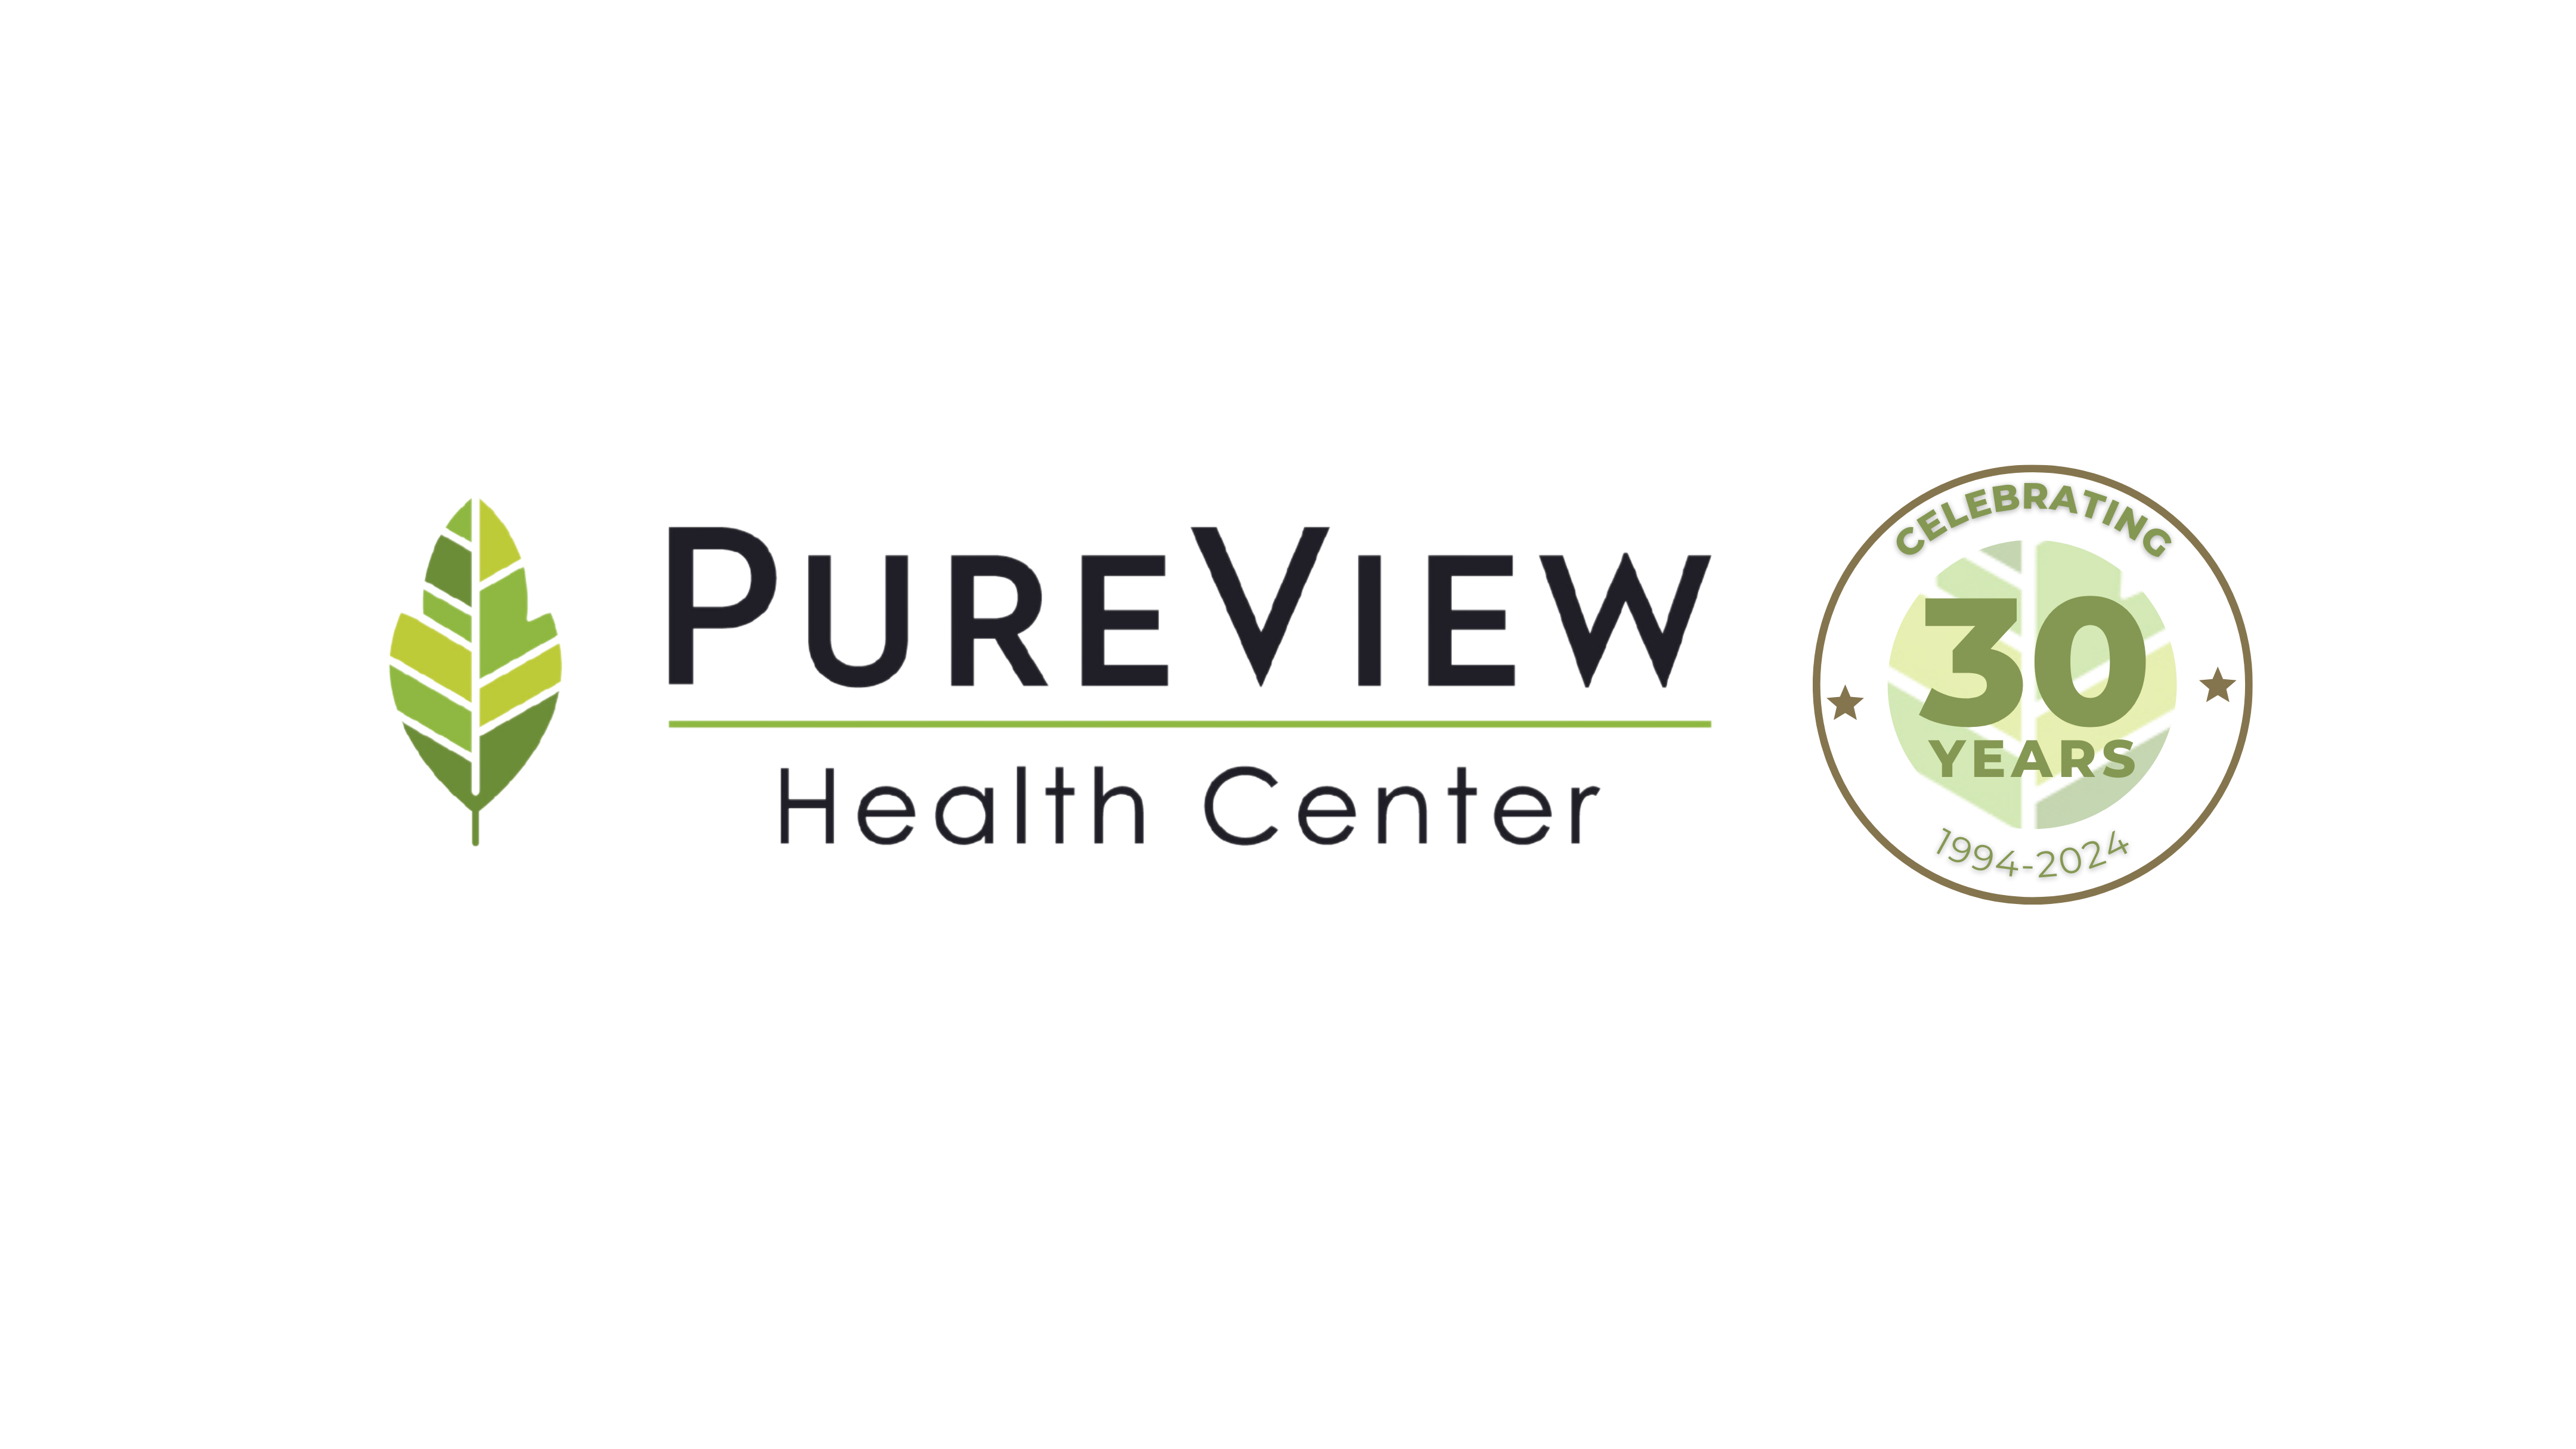 Pureview Health Center